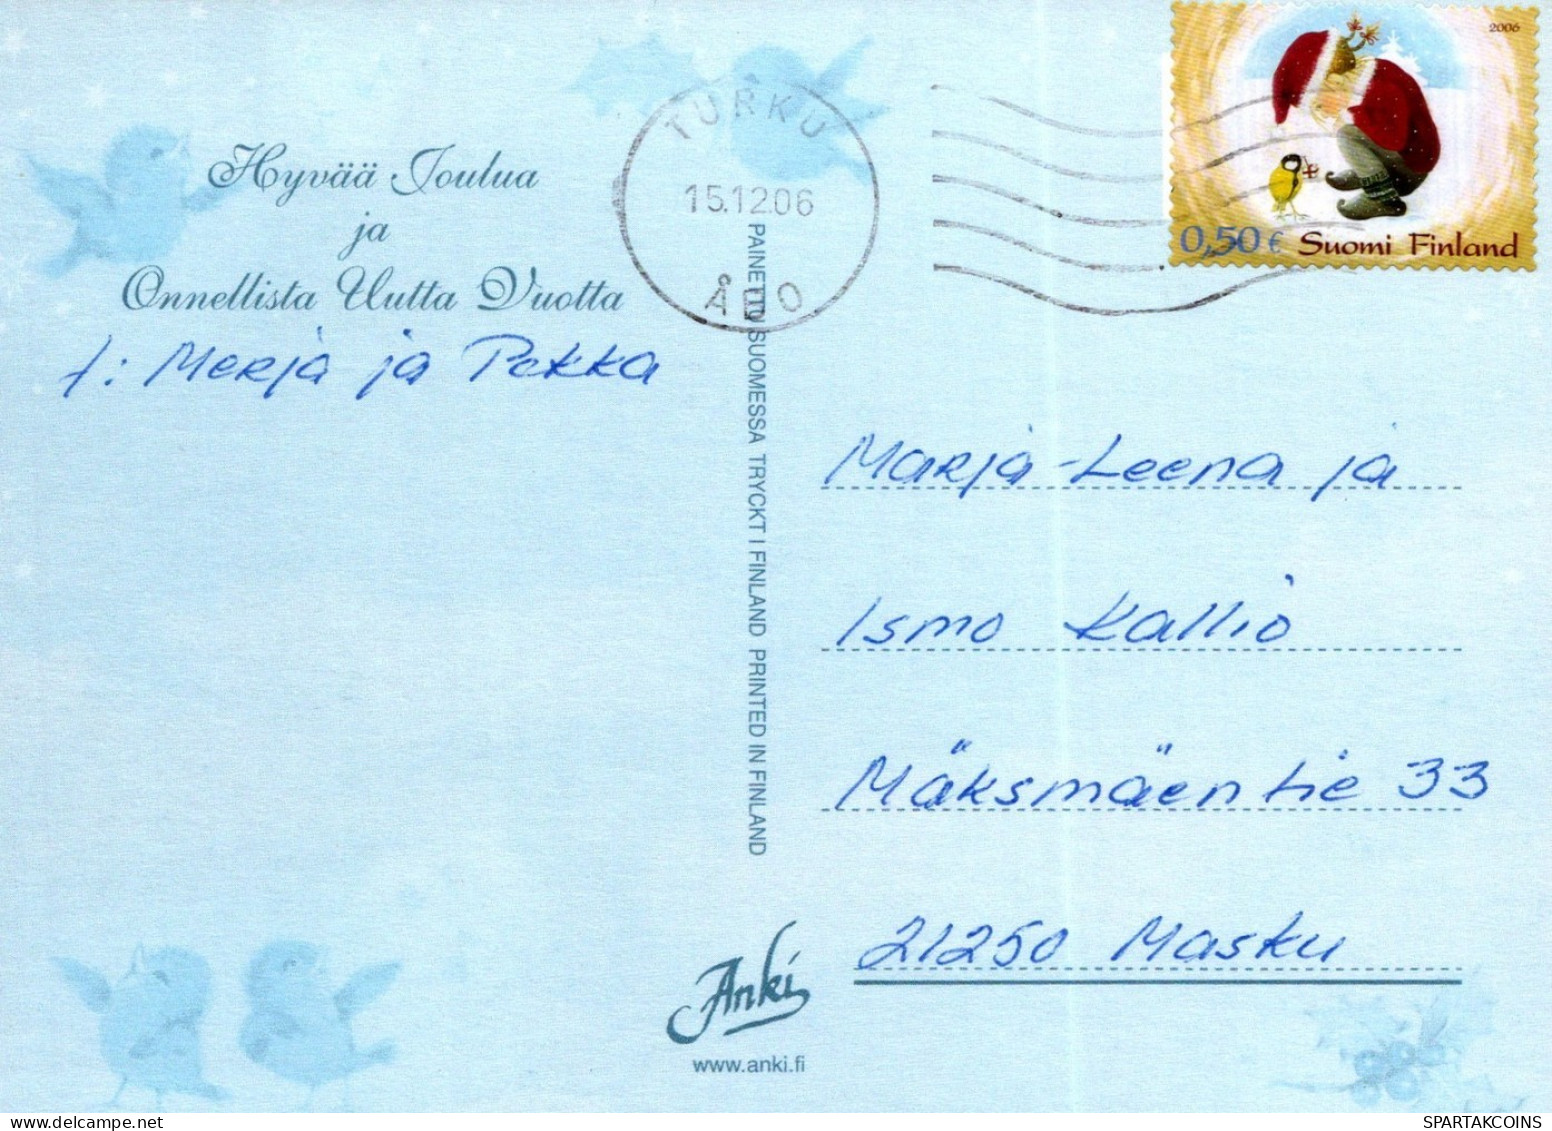 ANGEL CHRISTMAS Holidays Vintage Postcard CPSM #PAJ319.GB - Anges